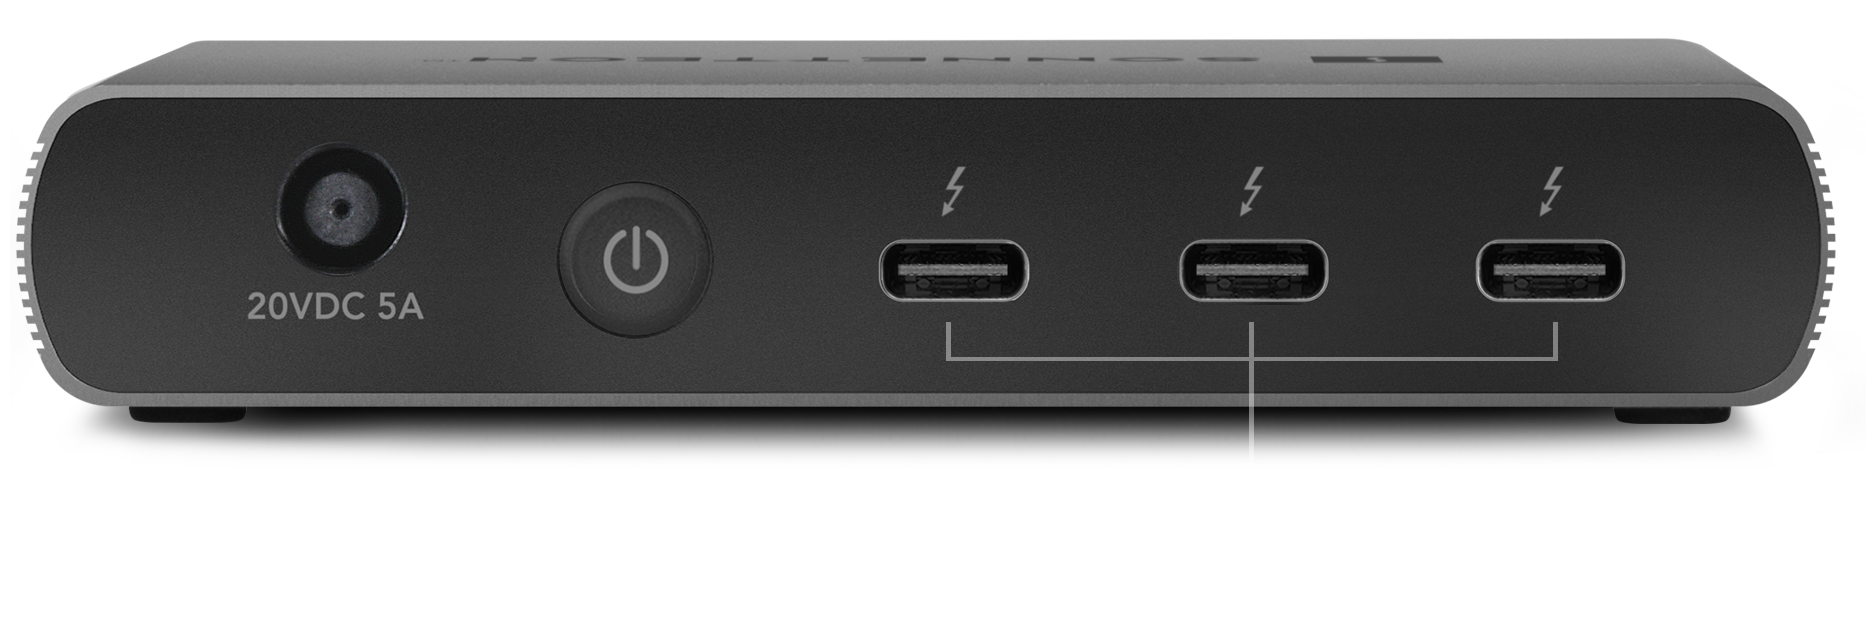 Echo 5 Thunderbolt 4 Hub Back Panel